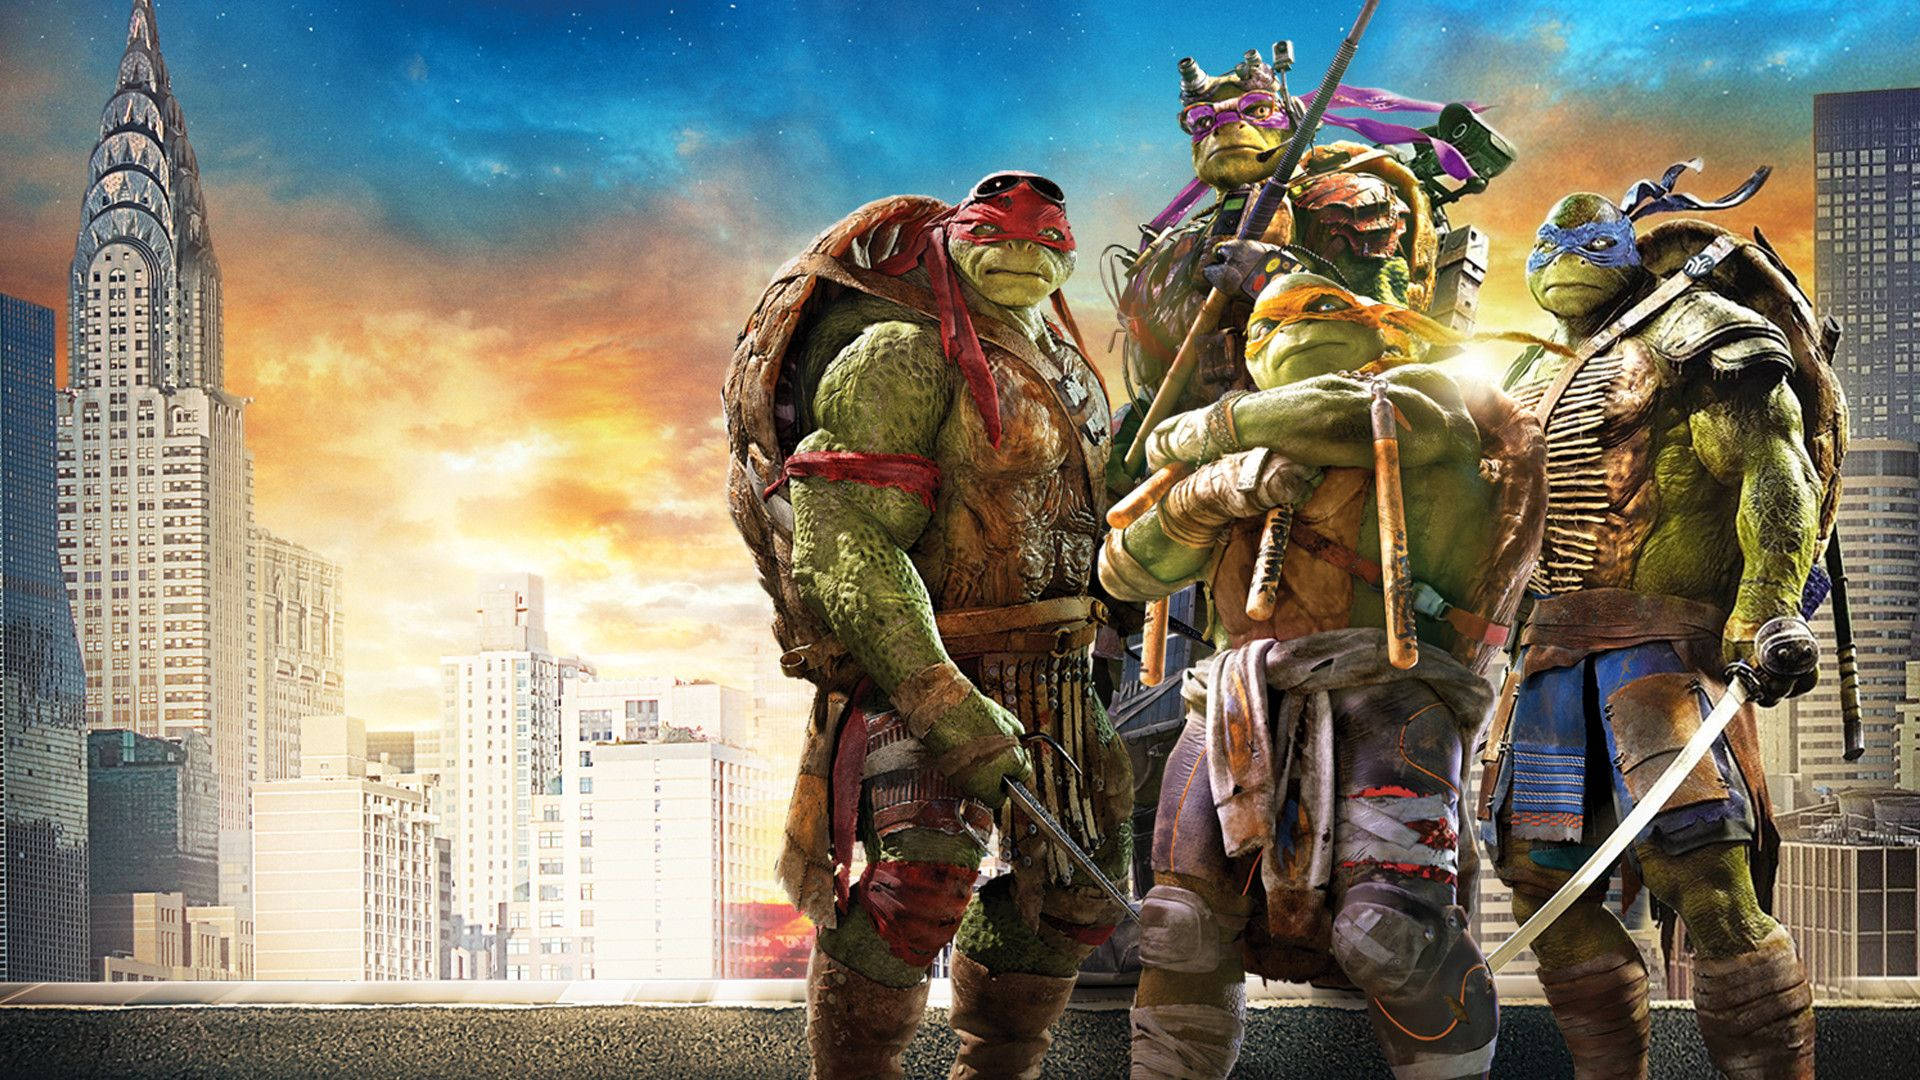 330+ Teenage Mutant Ninja Turtles HD Wallpapers and Backgrounds